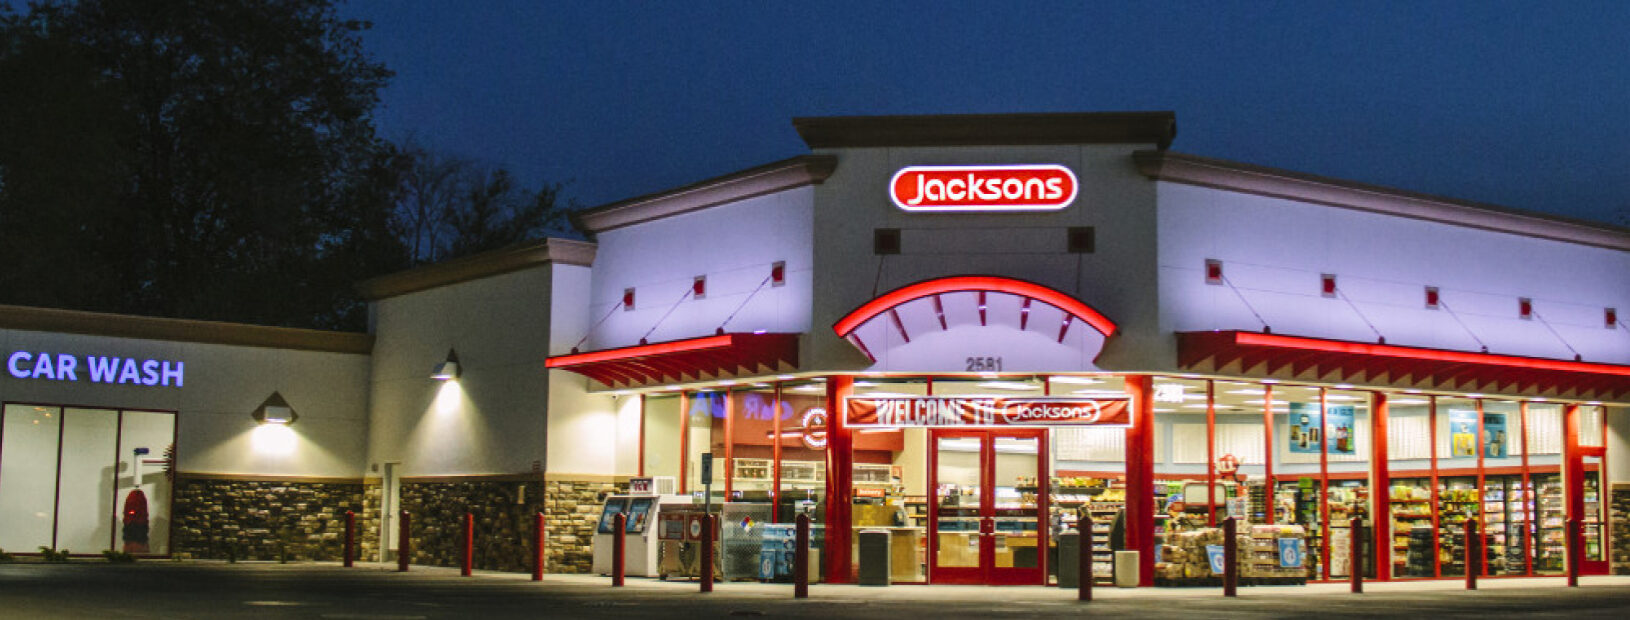 Jacksons foods stores convenience retail location